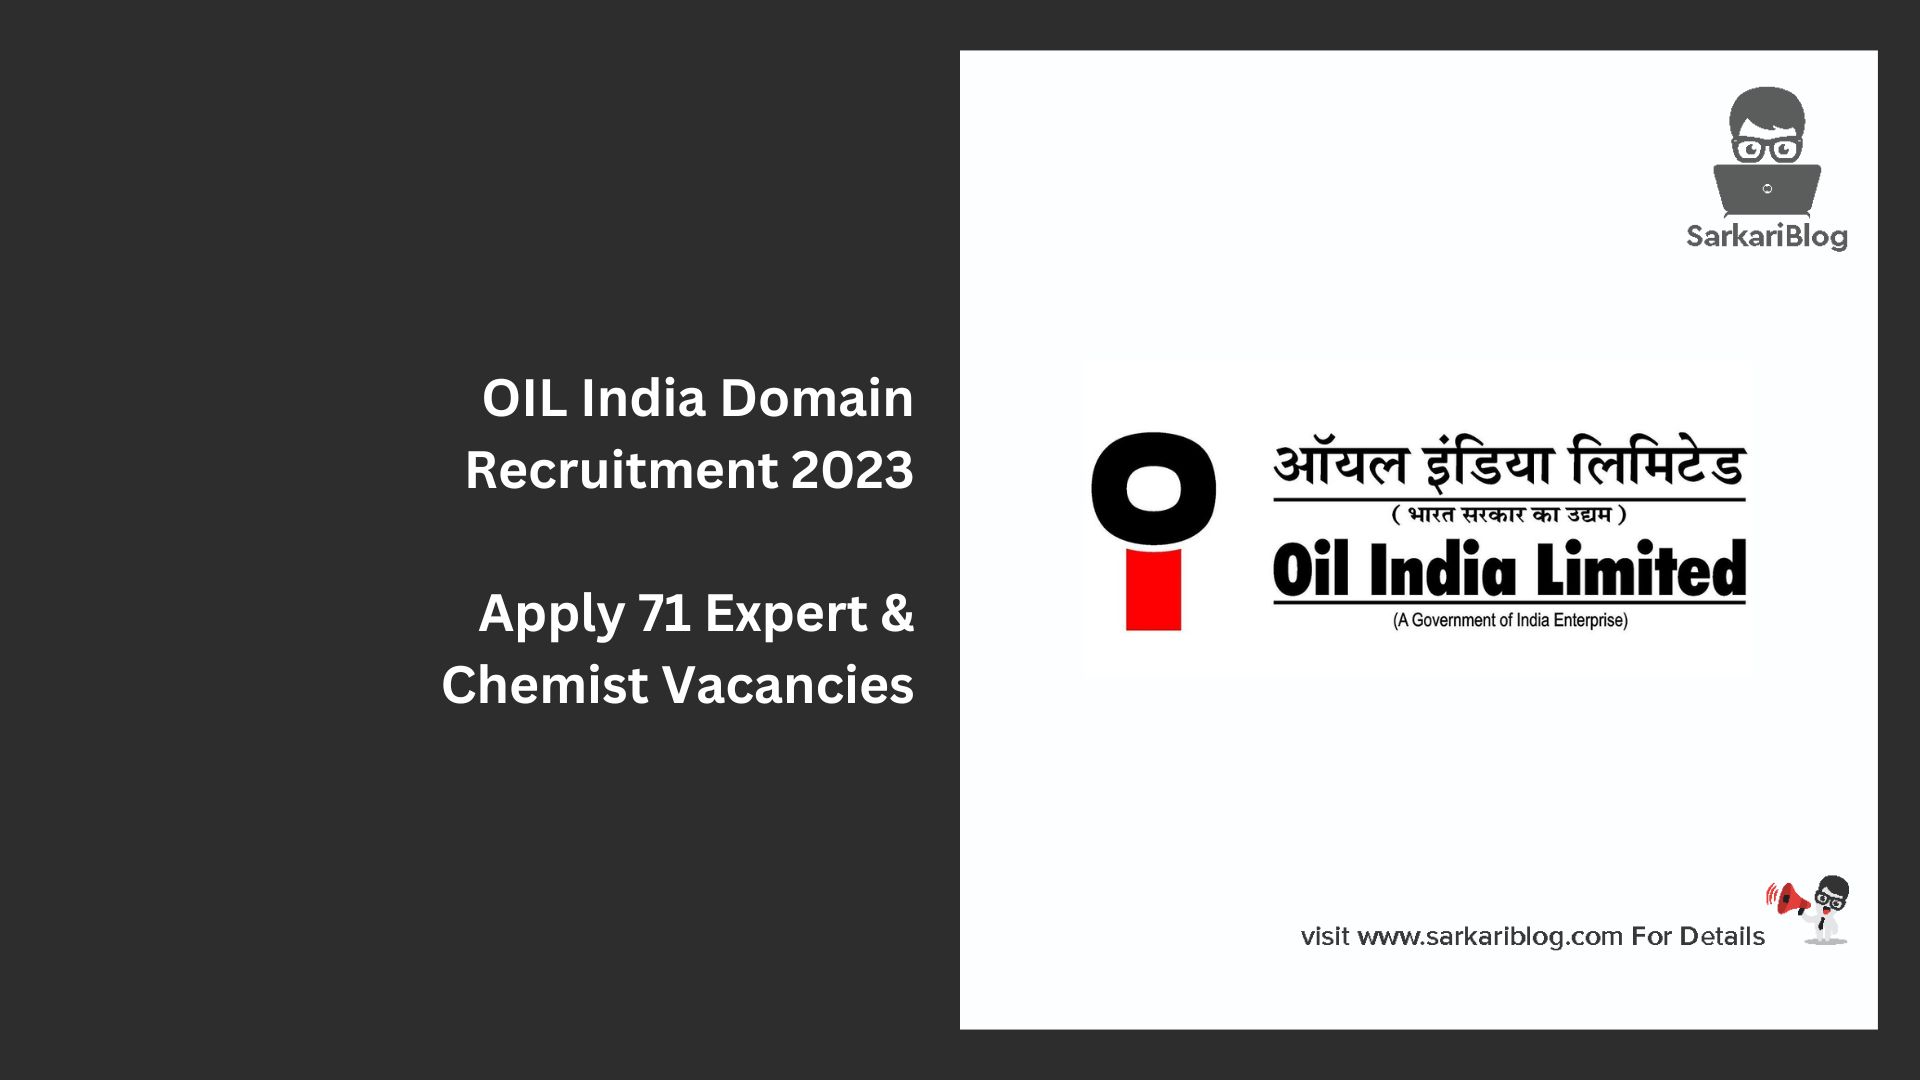 OIL India Domain Recruitment 2023